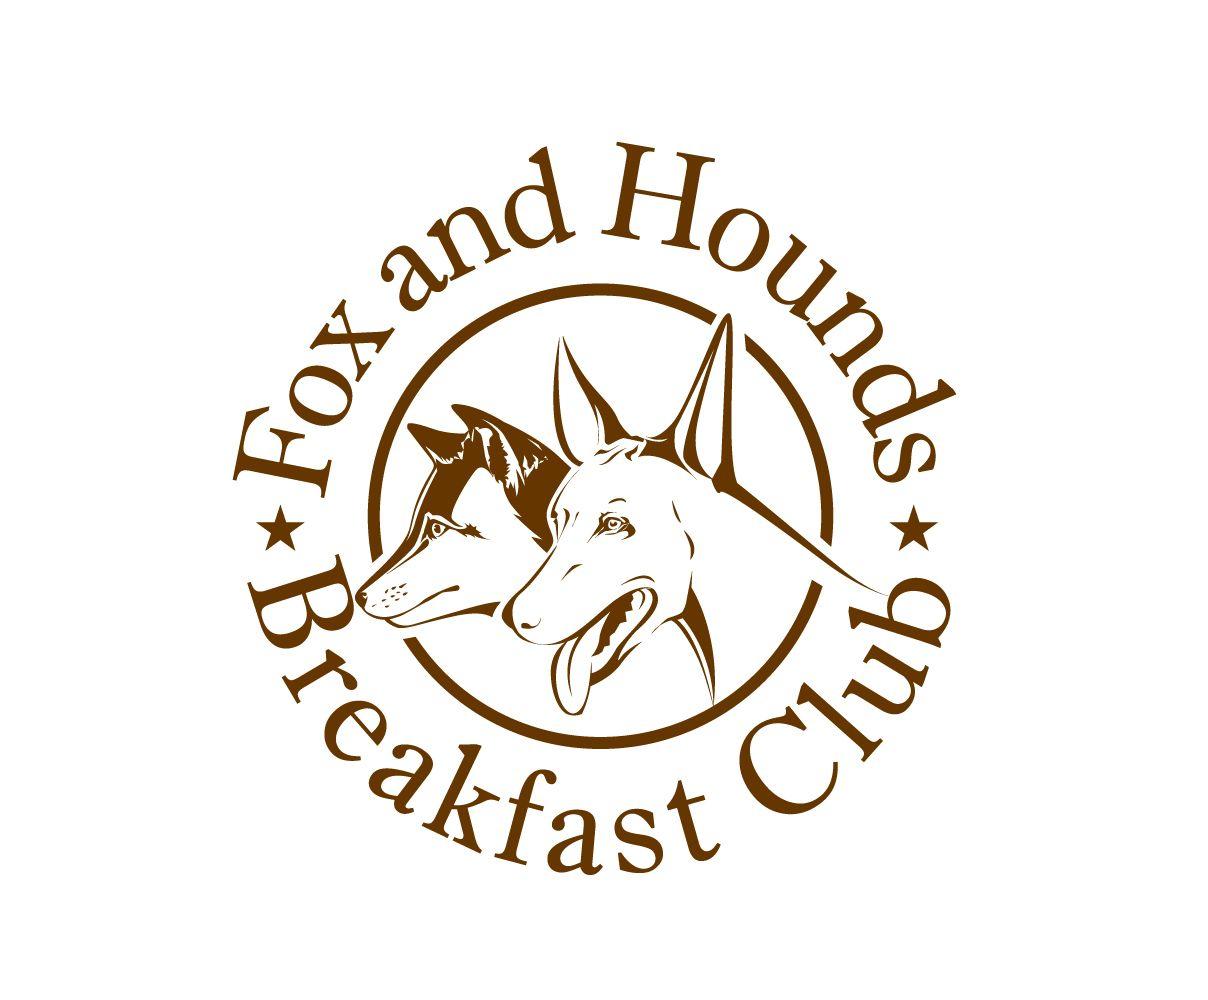 Breakfast Company Logo - Masculine, Upmarket, Club Logo Design for Fox and Hounds Breakfast ...